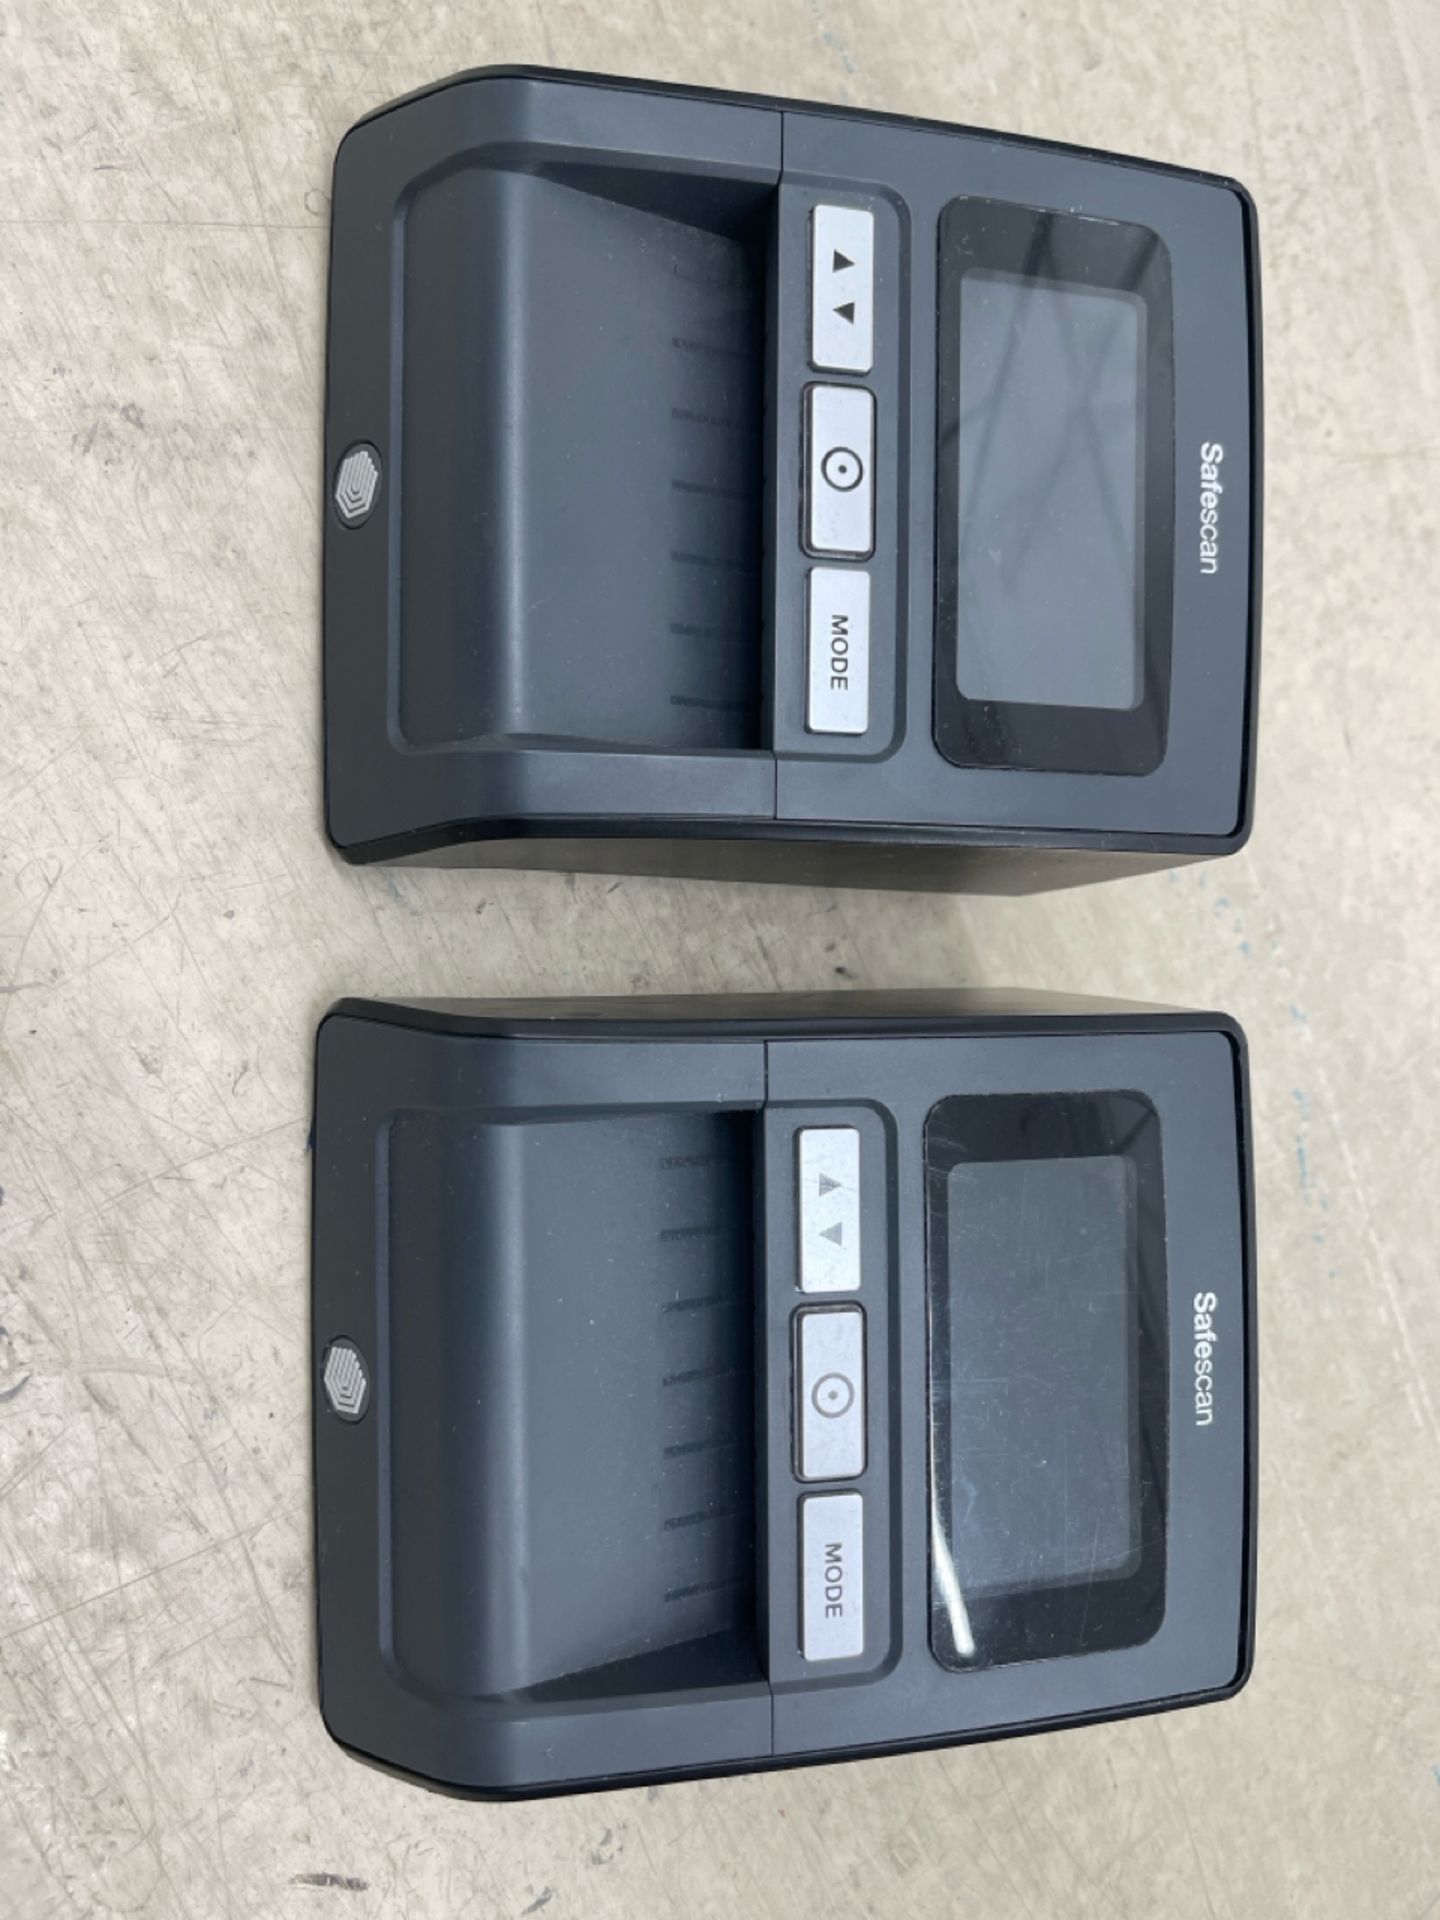 Pair Of Safescan Counterfeit Detector Machines